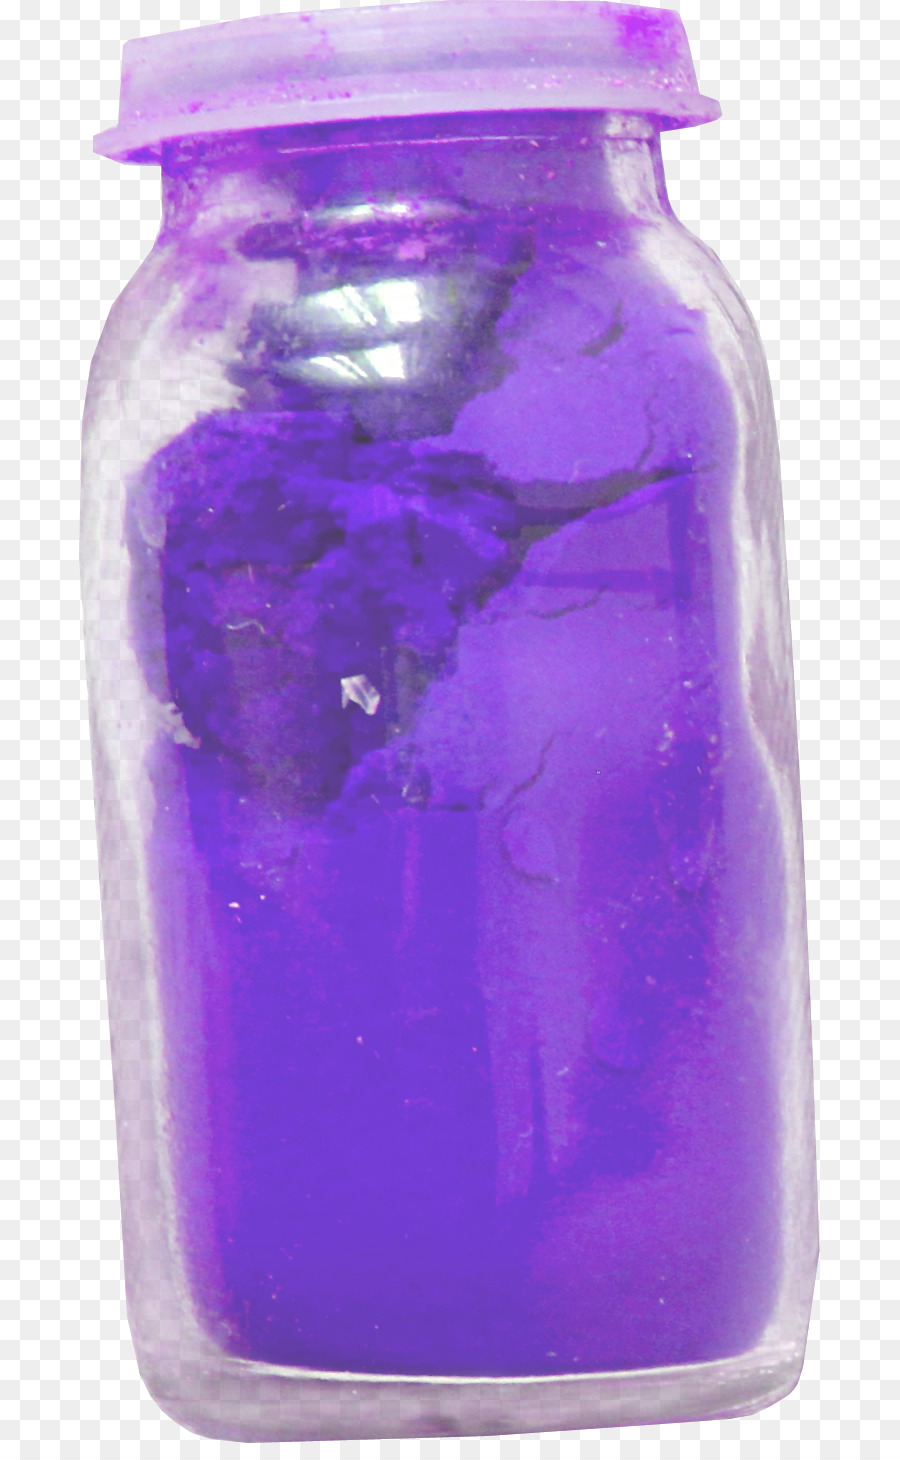 Glasflasche Lila - Ziemlich lila Glas Flasche